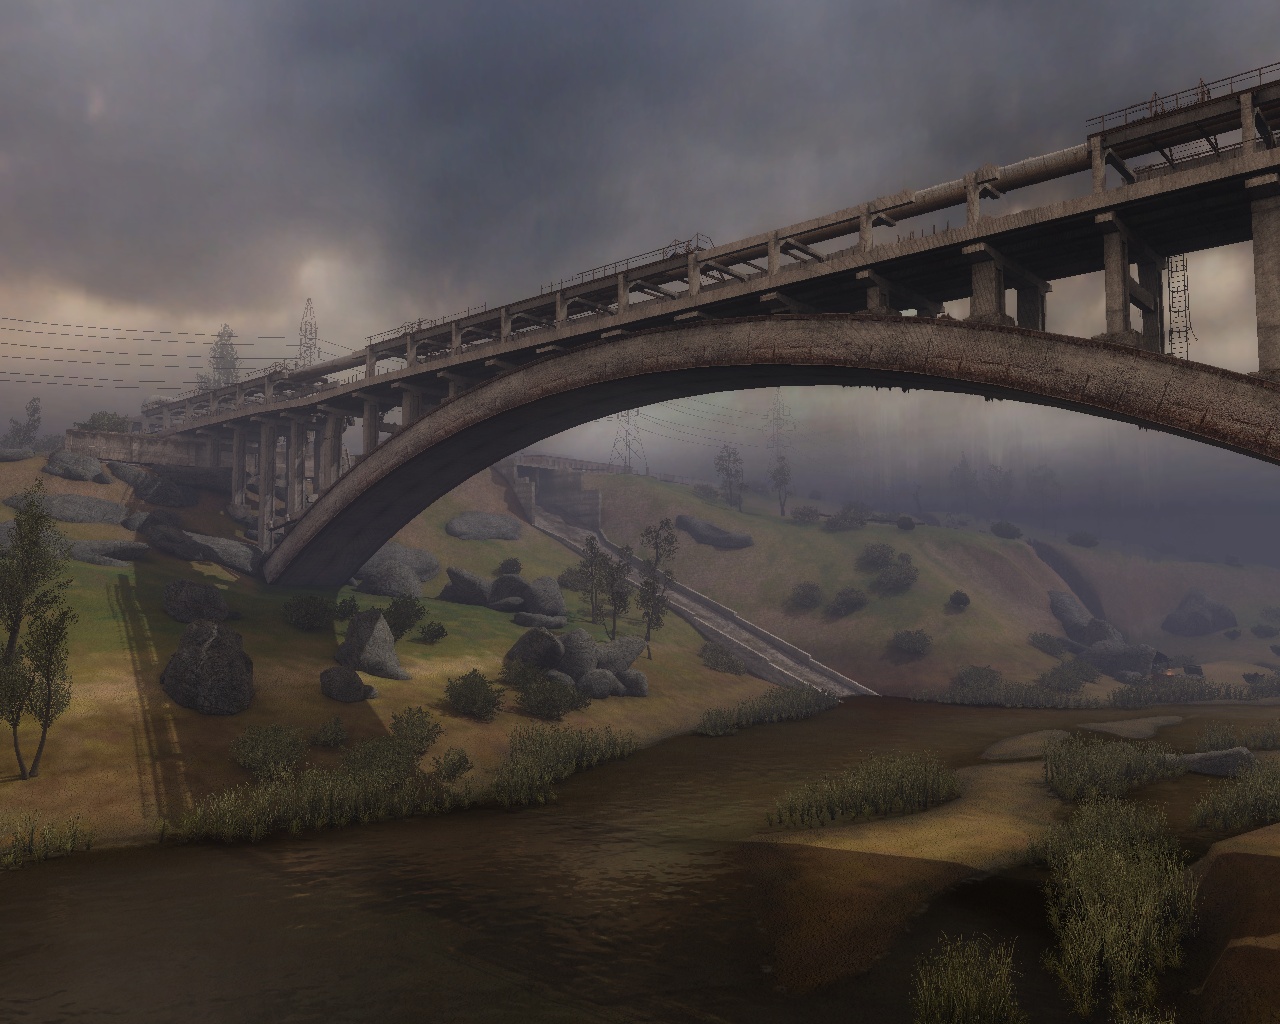 мост смерти в припяти